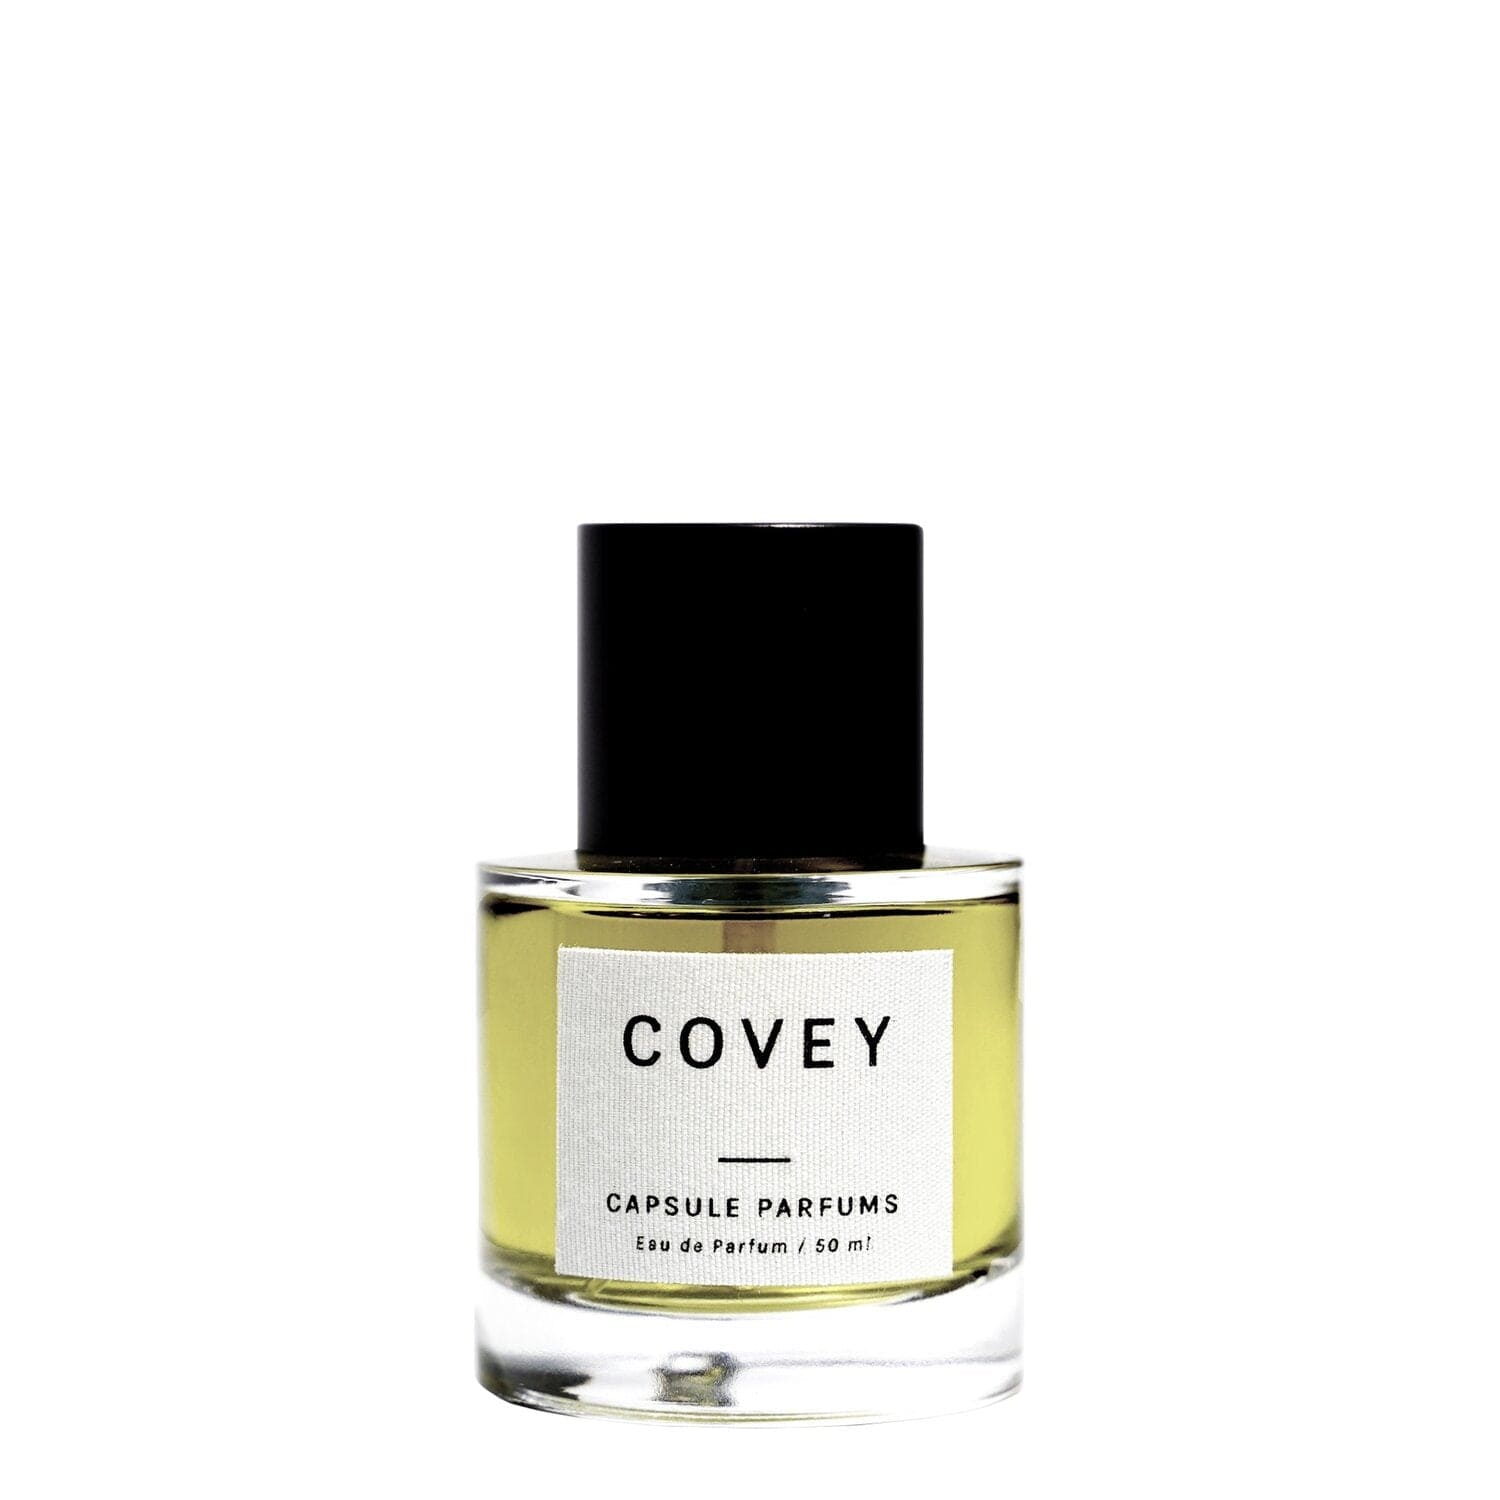 Capsule Parfumerie Perfume & Cologne Covey sunja link - canada